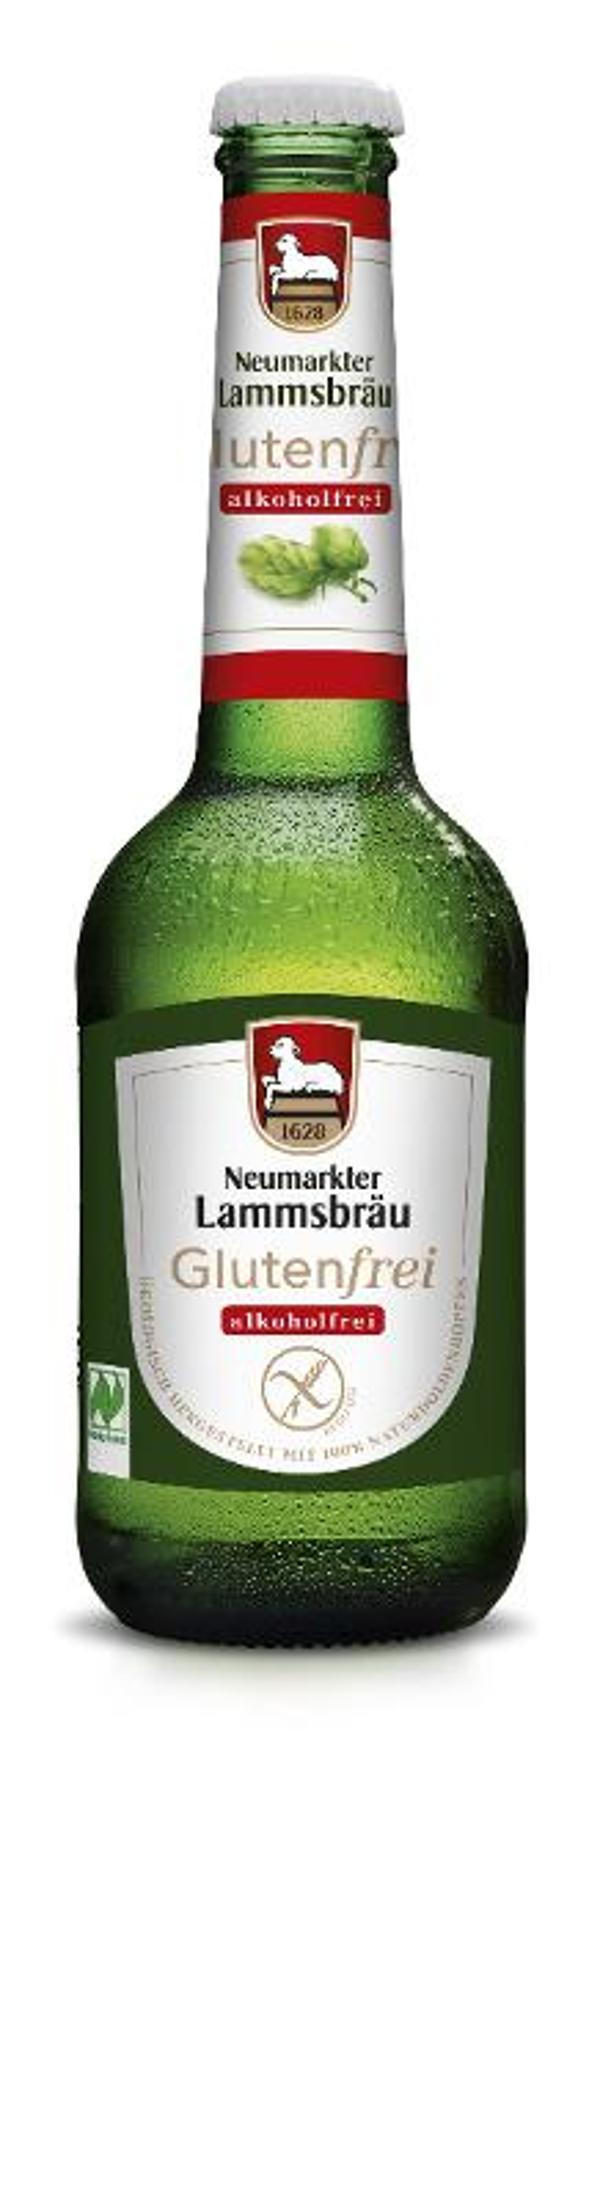 Produktfoto zu Lammsbräu Bier 0,3 alkoholfrei _ glutenfrei